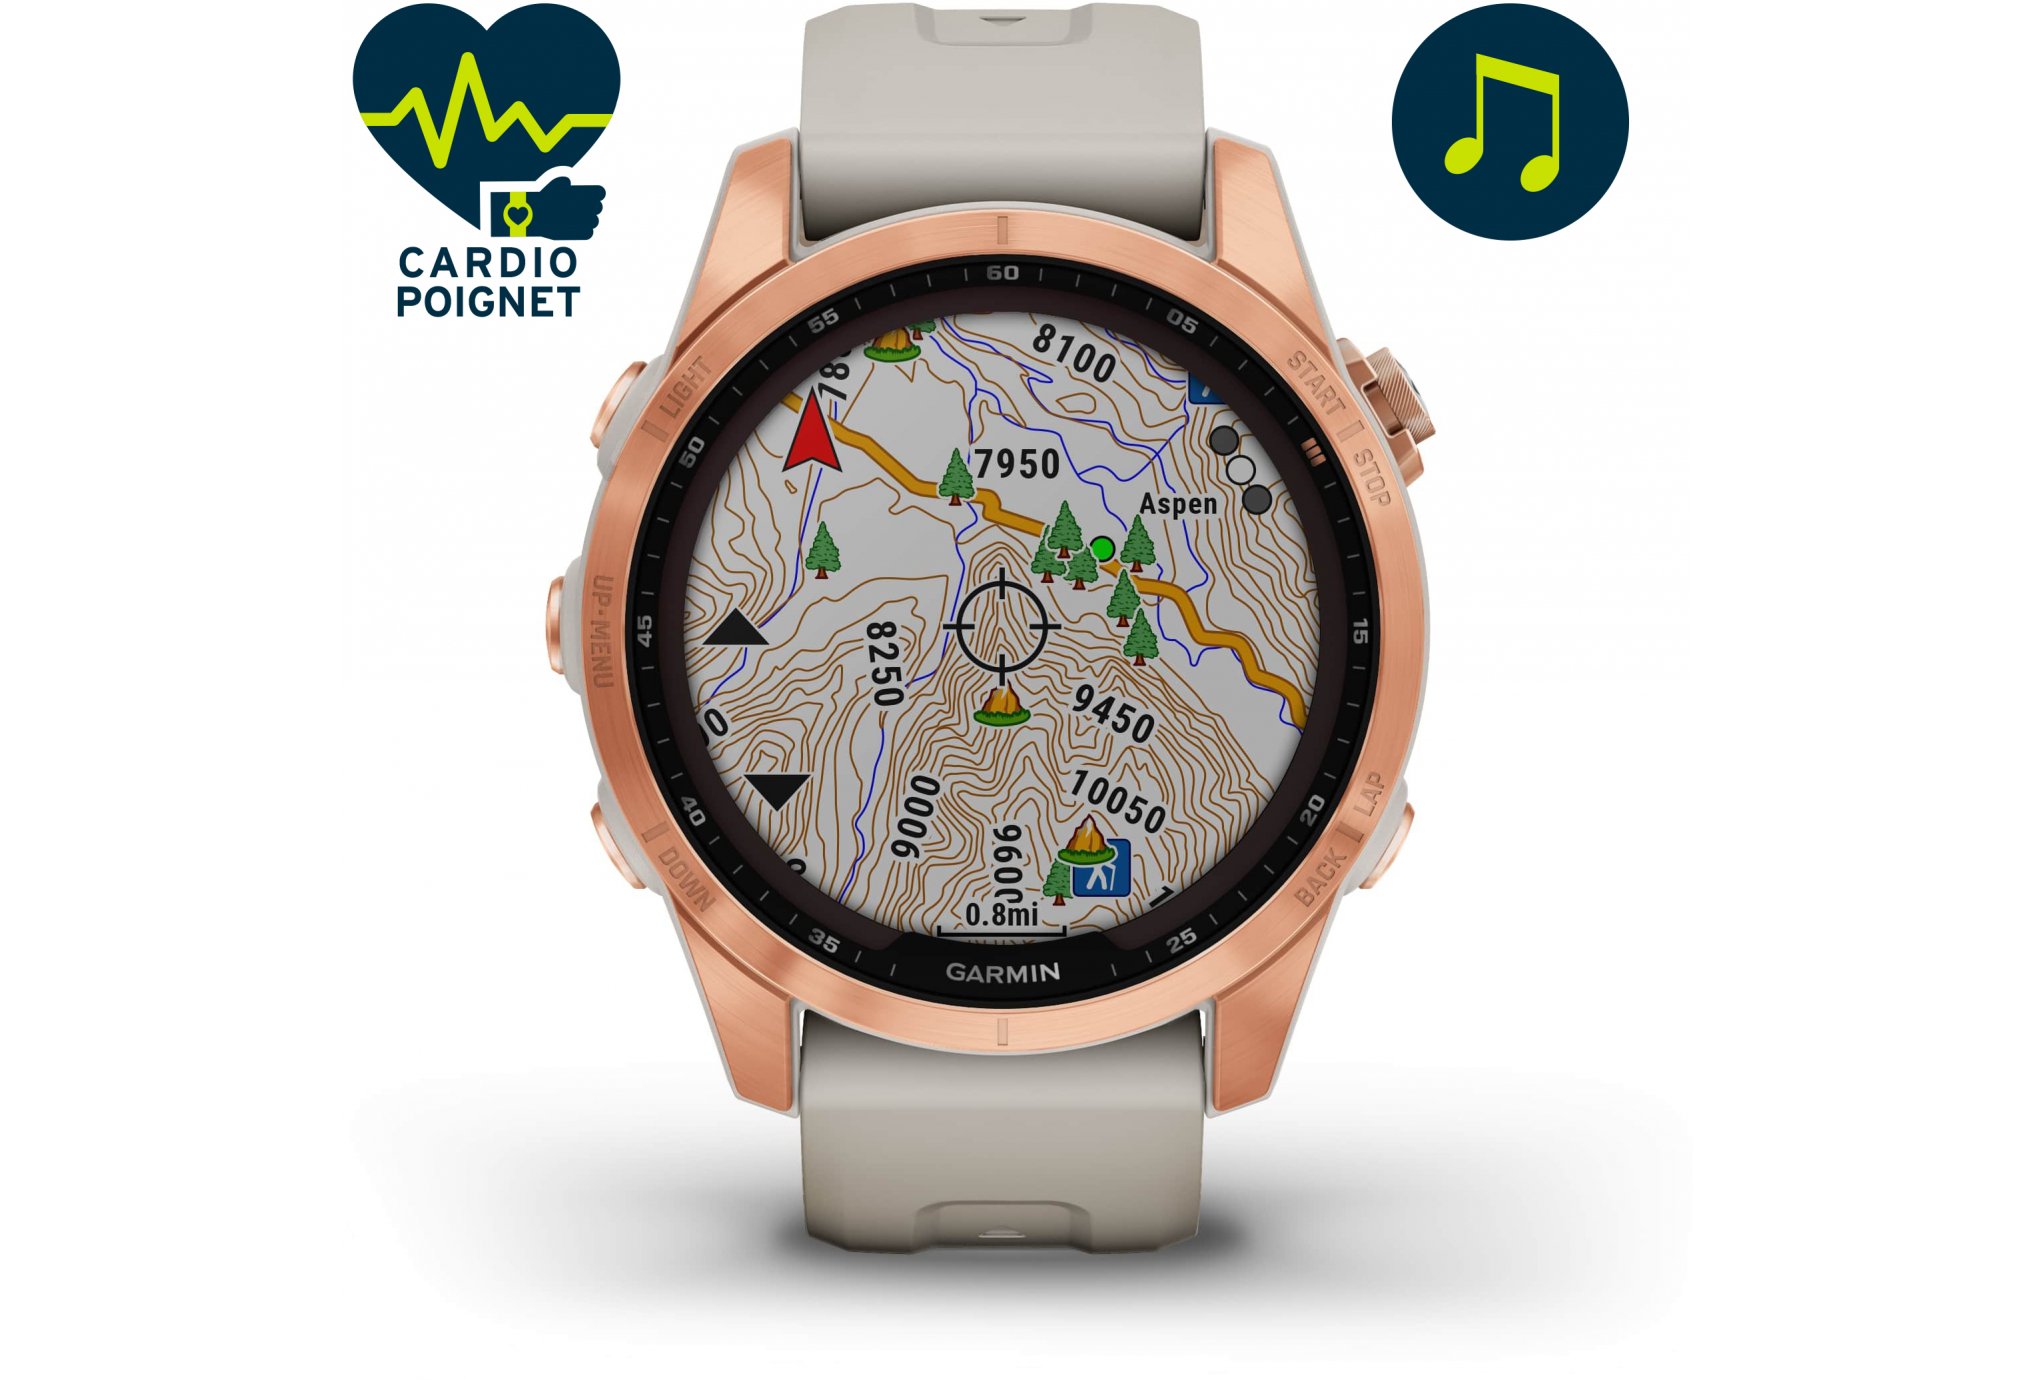 Montre cardio GPS added a new photo. - Montre cardio GPS